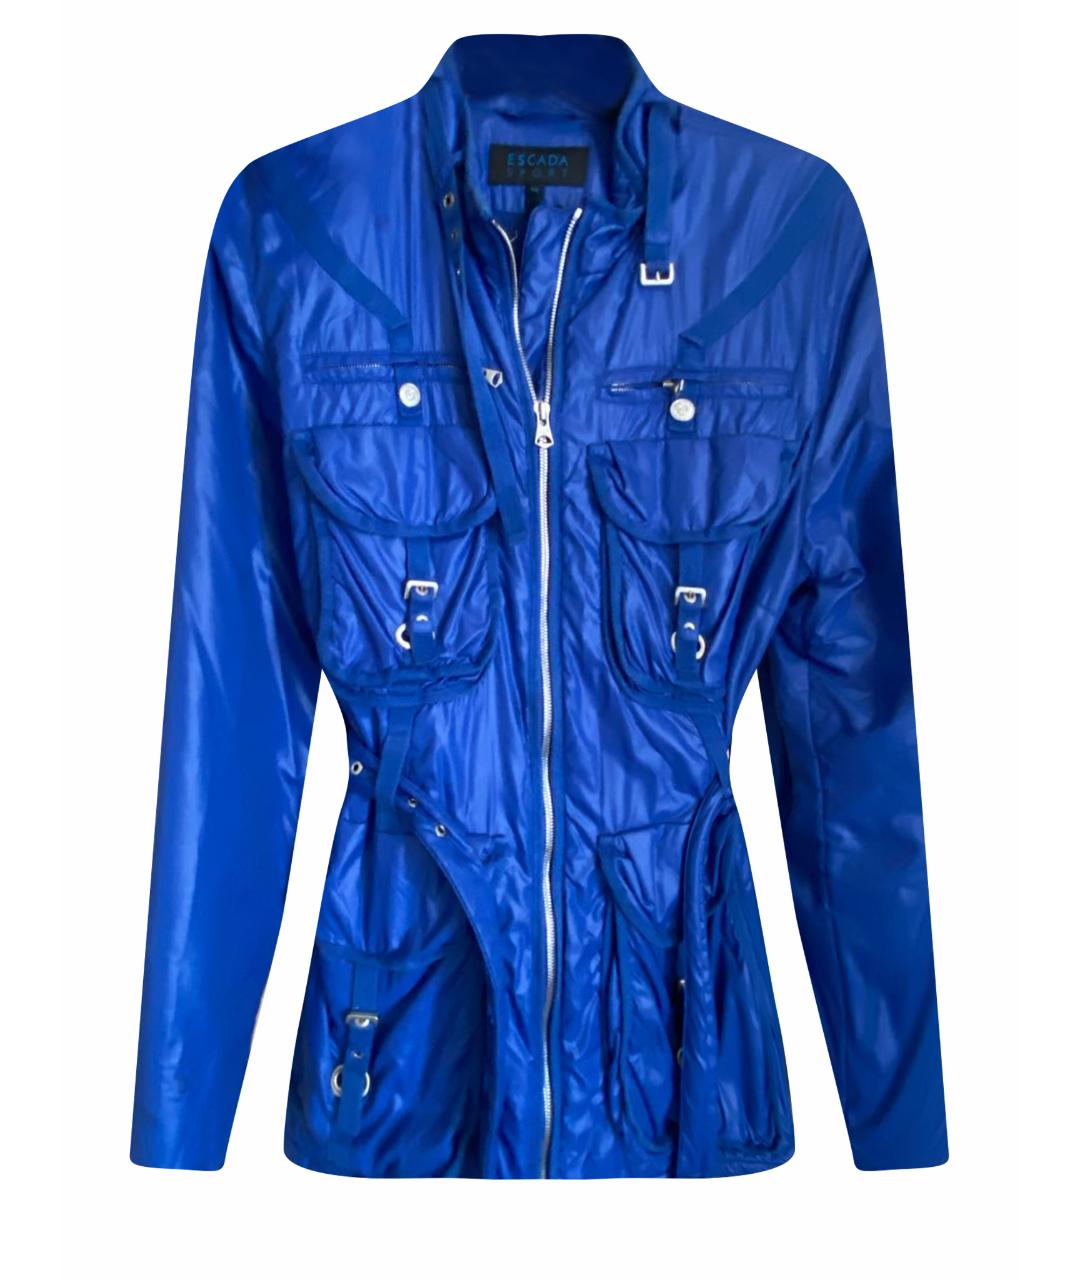 ESCADA Синяя куртка, фото 1